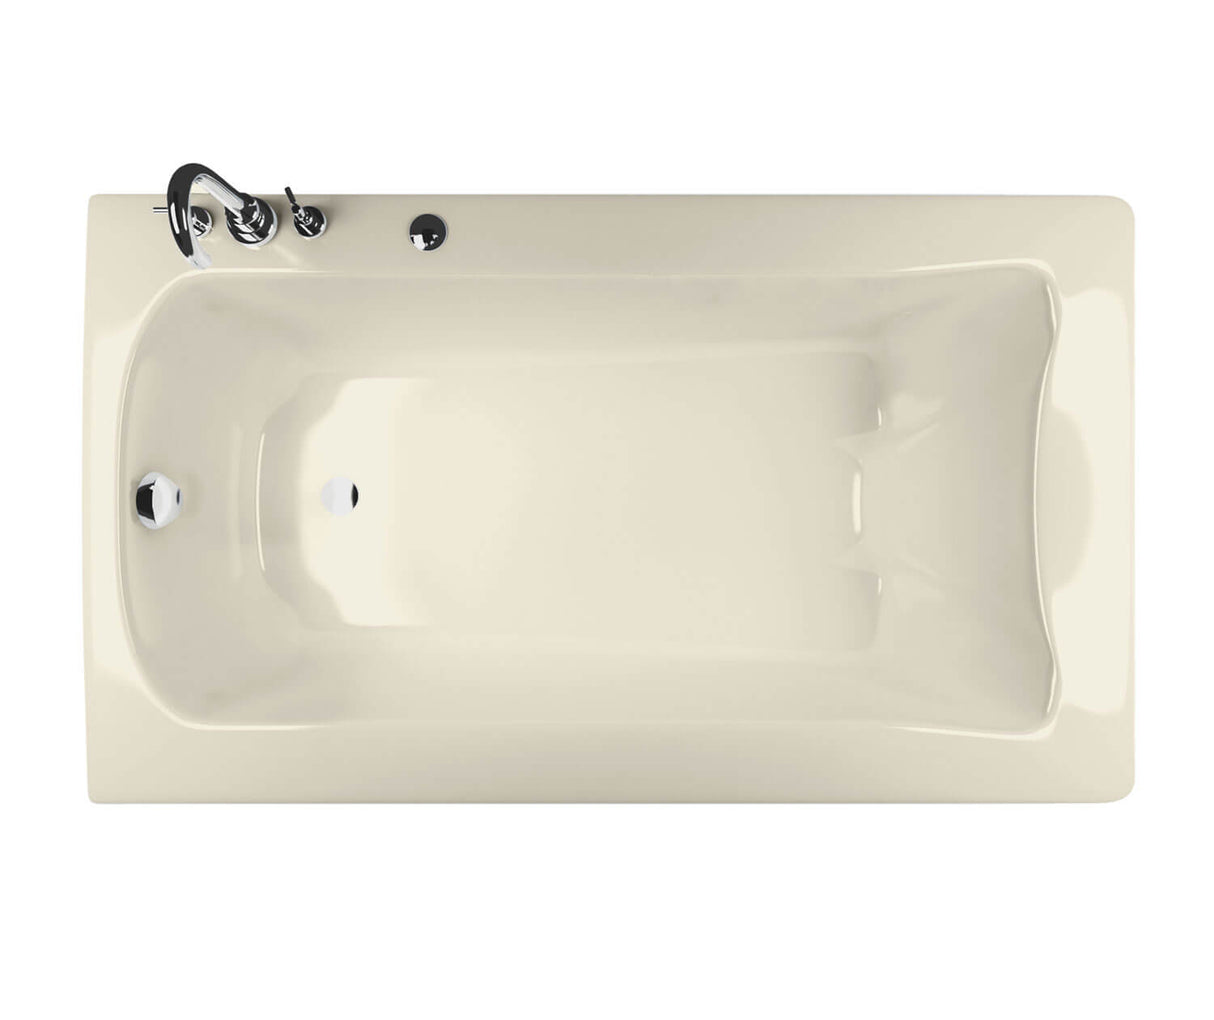 MAAX 105311-R-000-004 Release 6036 Acrylic Drop-in Right-Hand Drain Bathtub in Bone